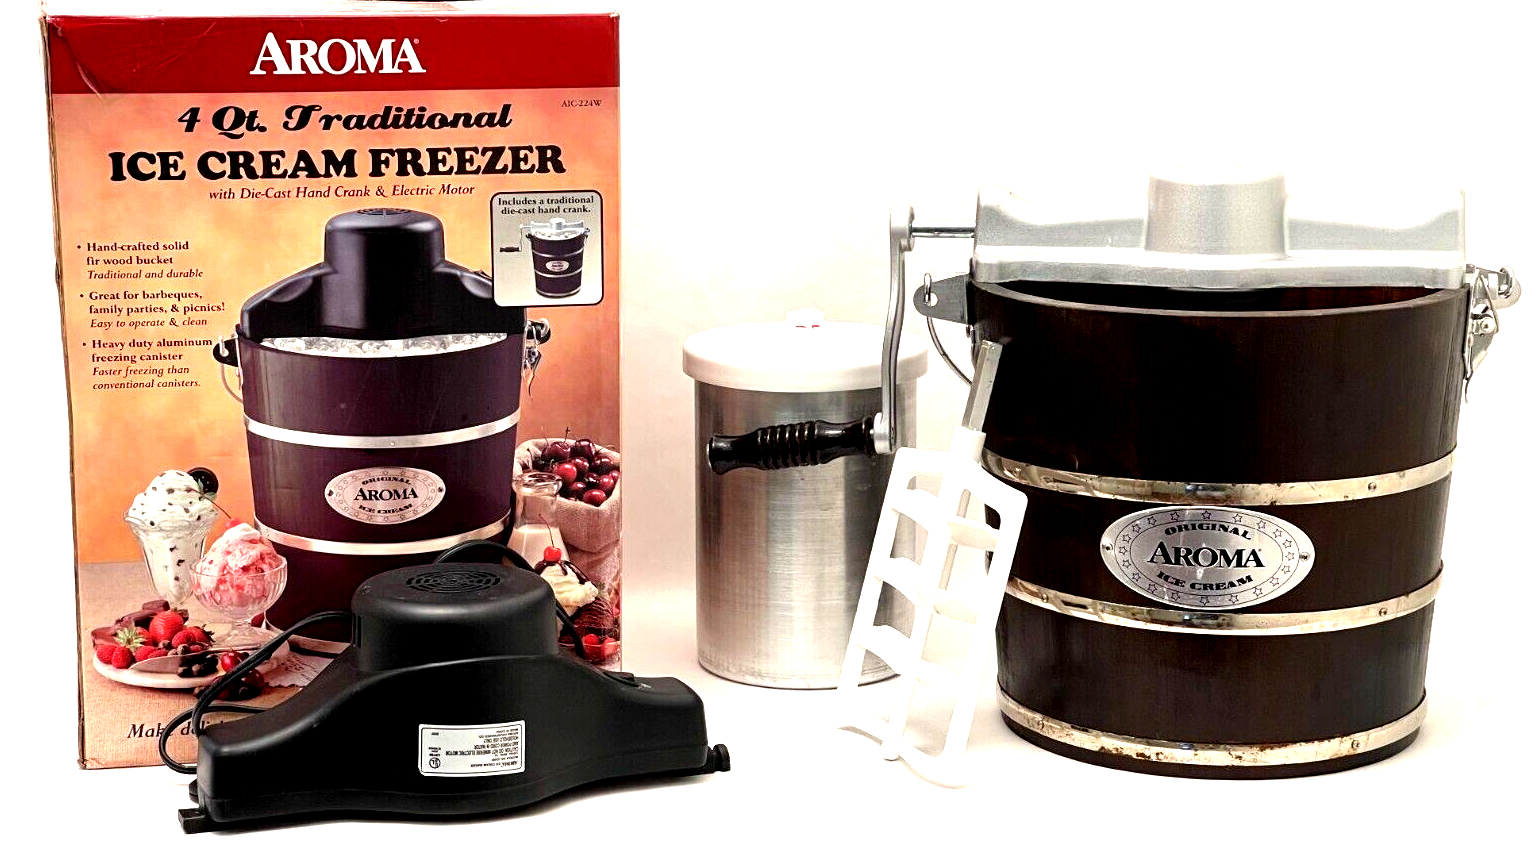 Aroma Ice Cream Freezer Traditional Ice Cream Maker Electric 4 Quart AIC-224W - $74.24